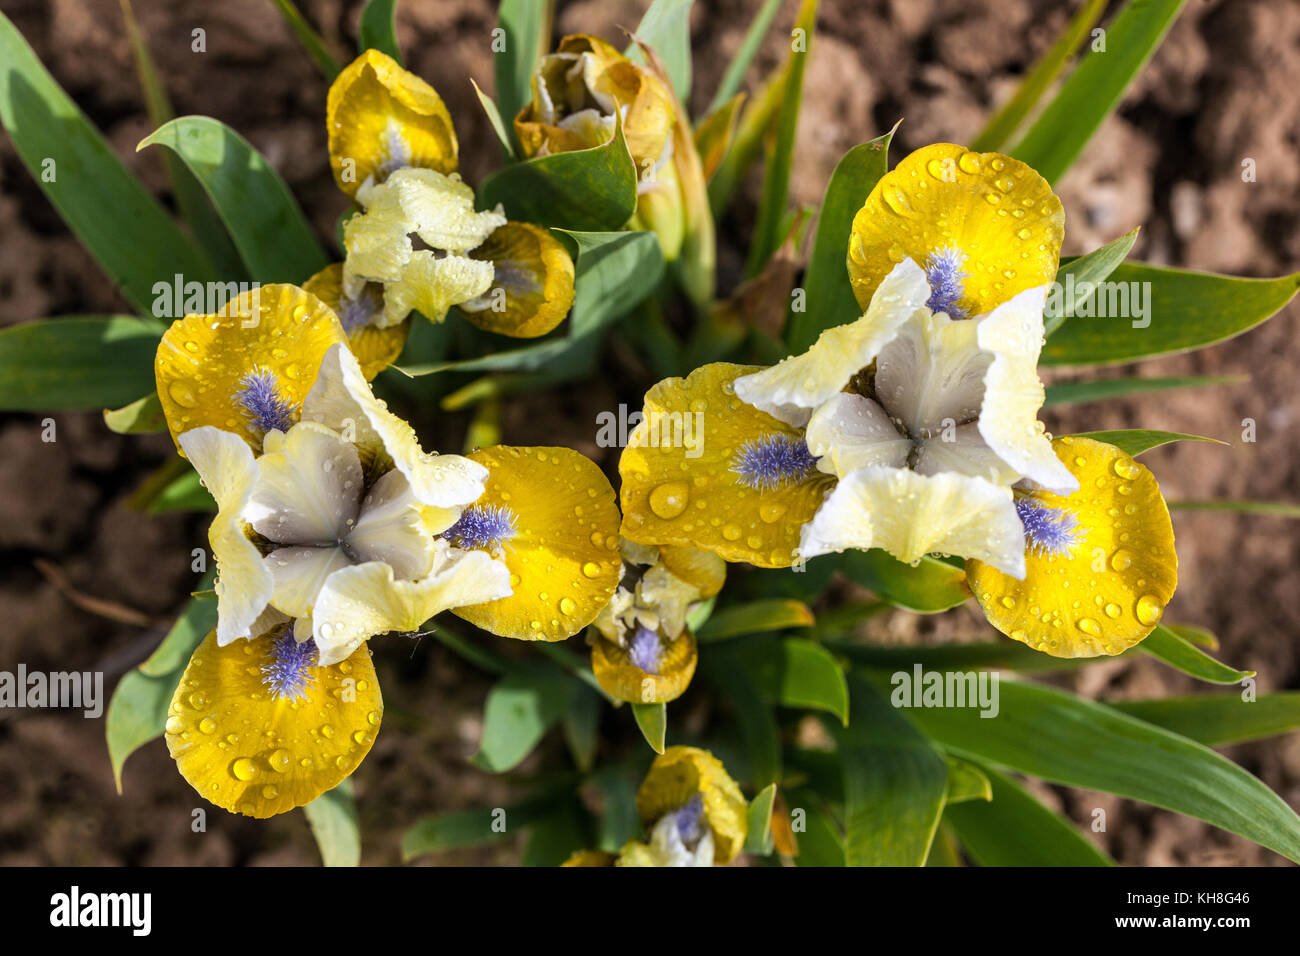 Standard Dwarf Bearded Iris barbata nana ' Knockout ' yellow falls blue beard miniature iris Stock Photo